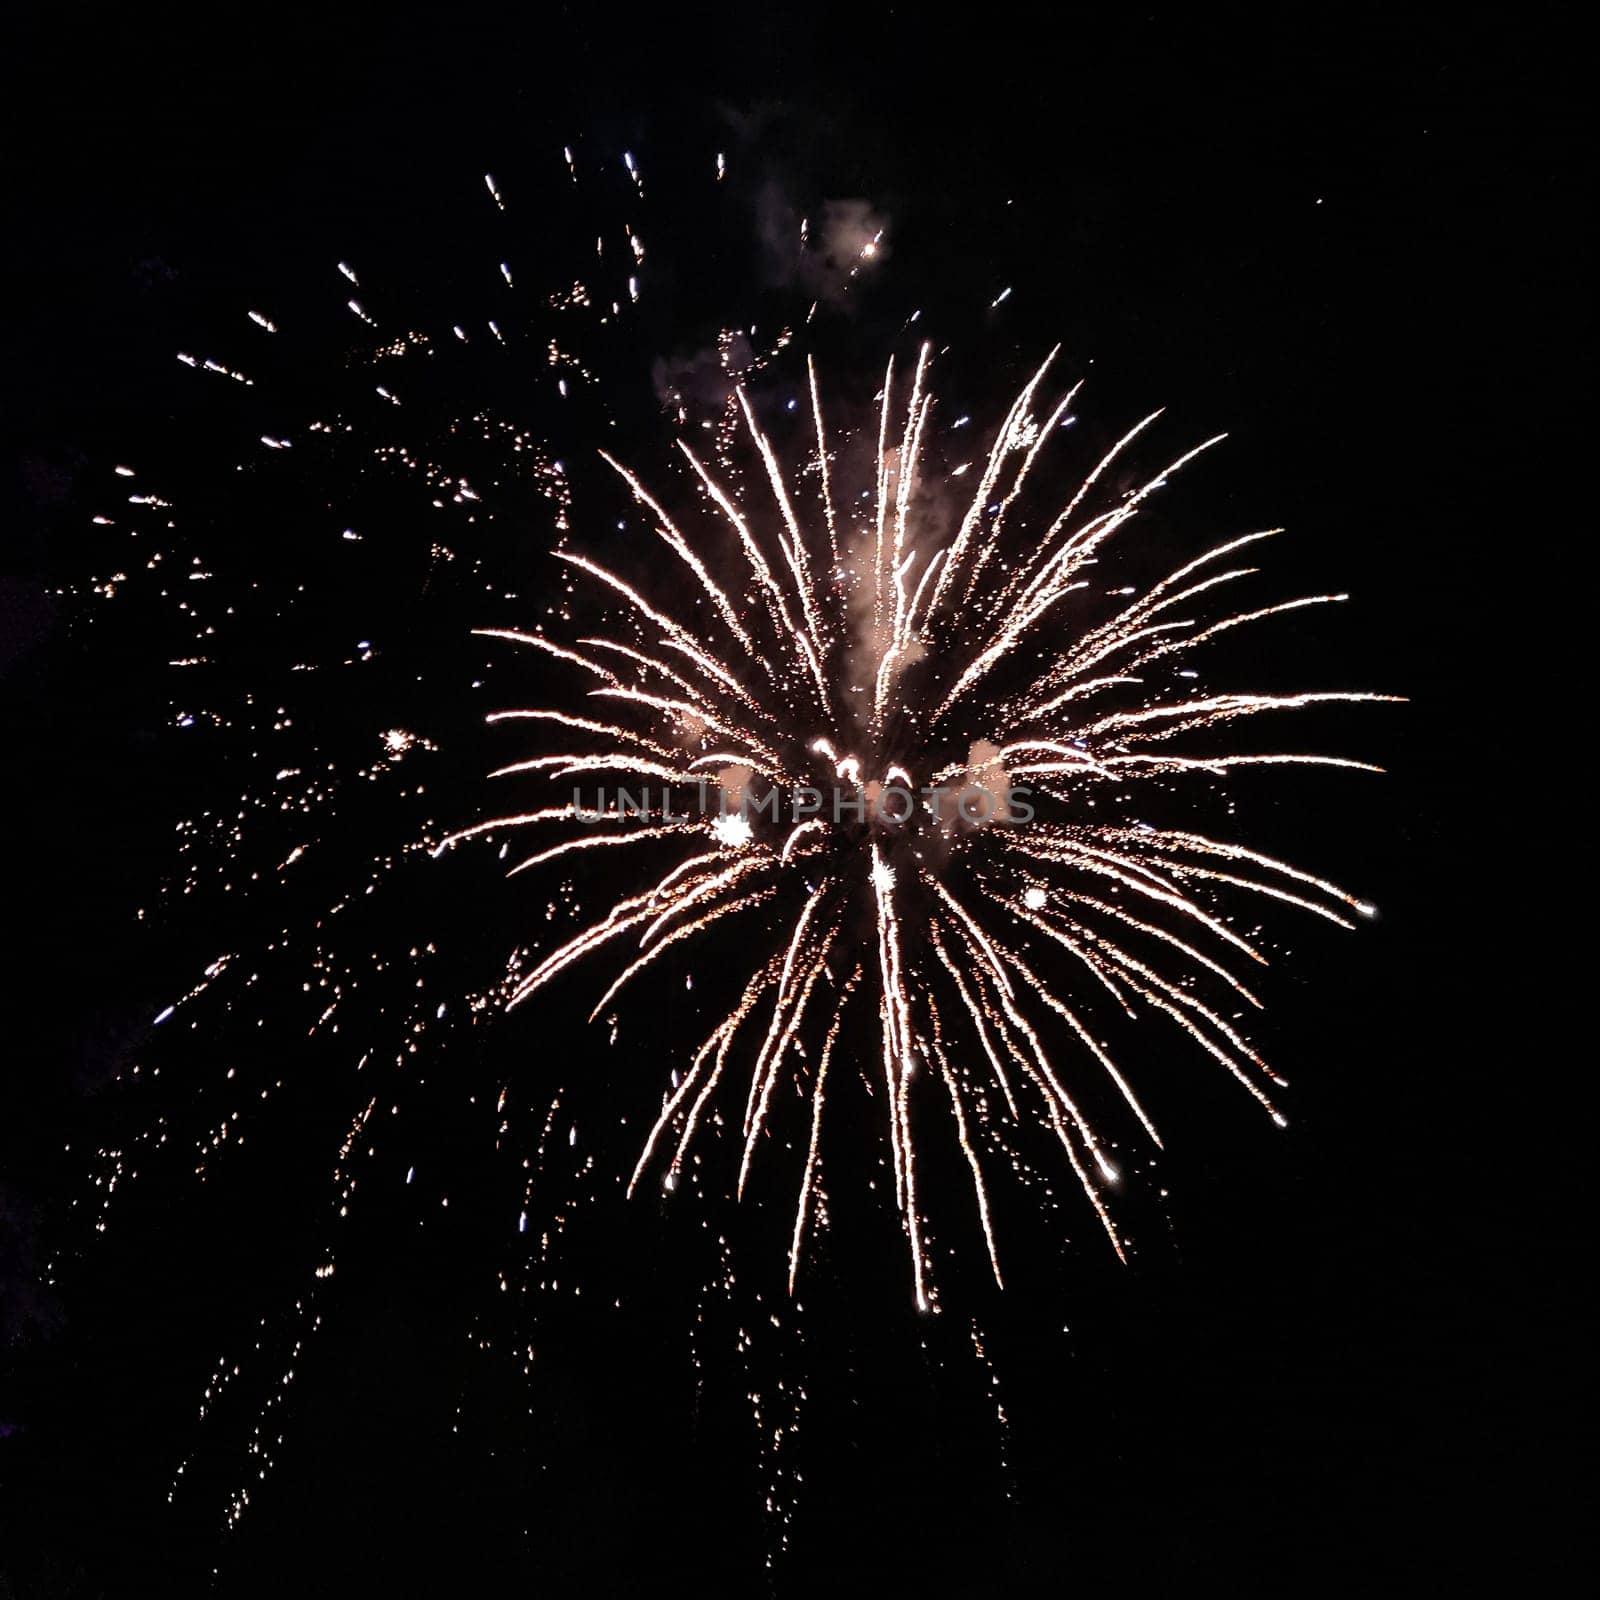 Circle explosion of festive real fireworks with golden sparks on black background for overlay blending mode by Rom4ek